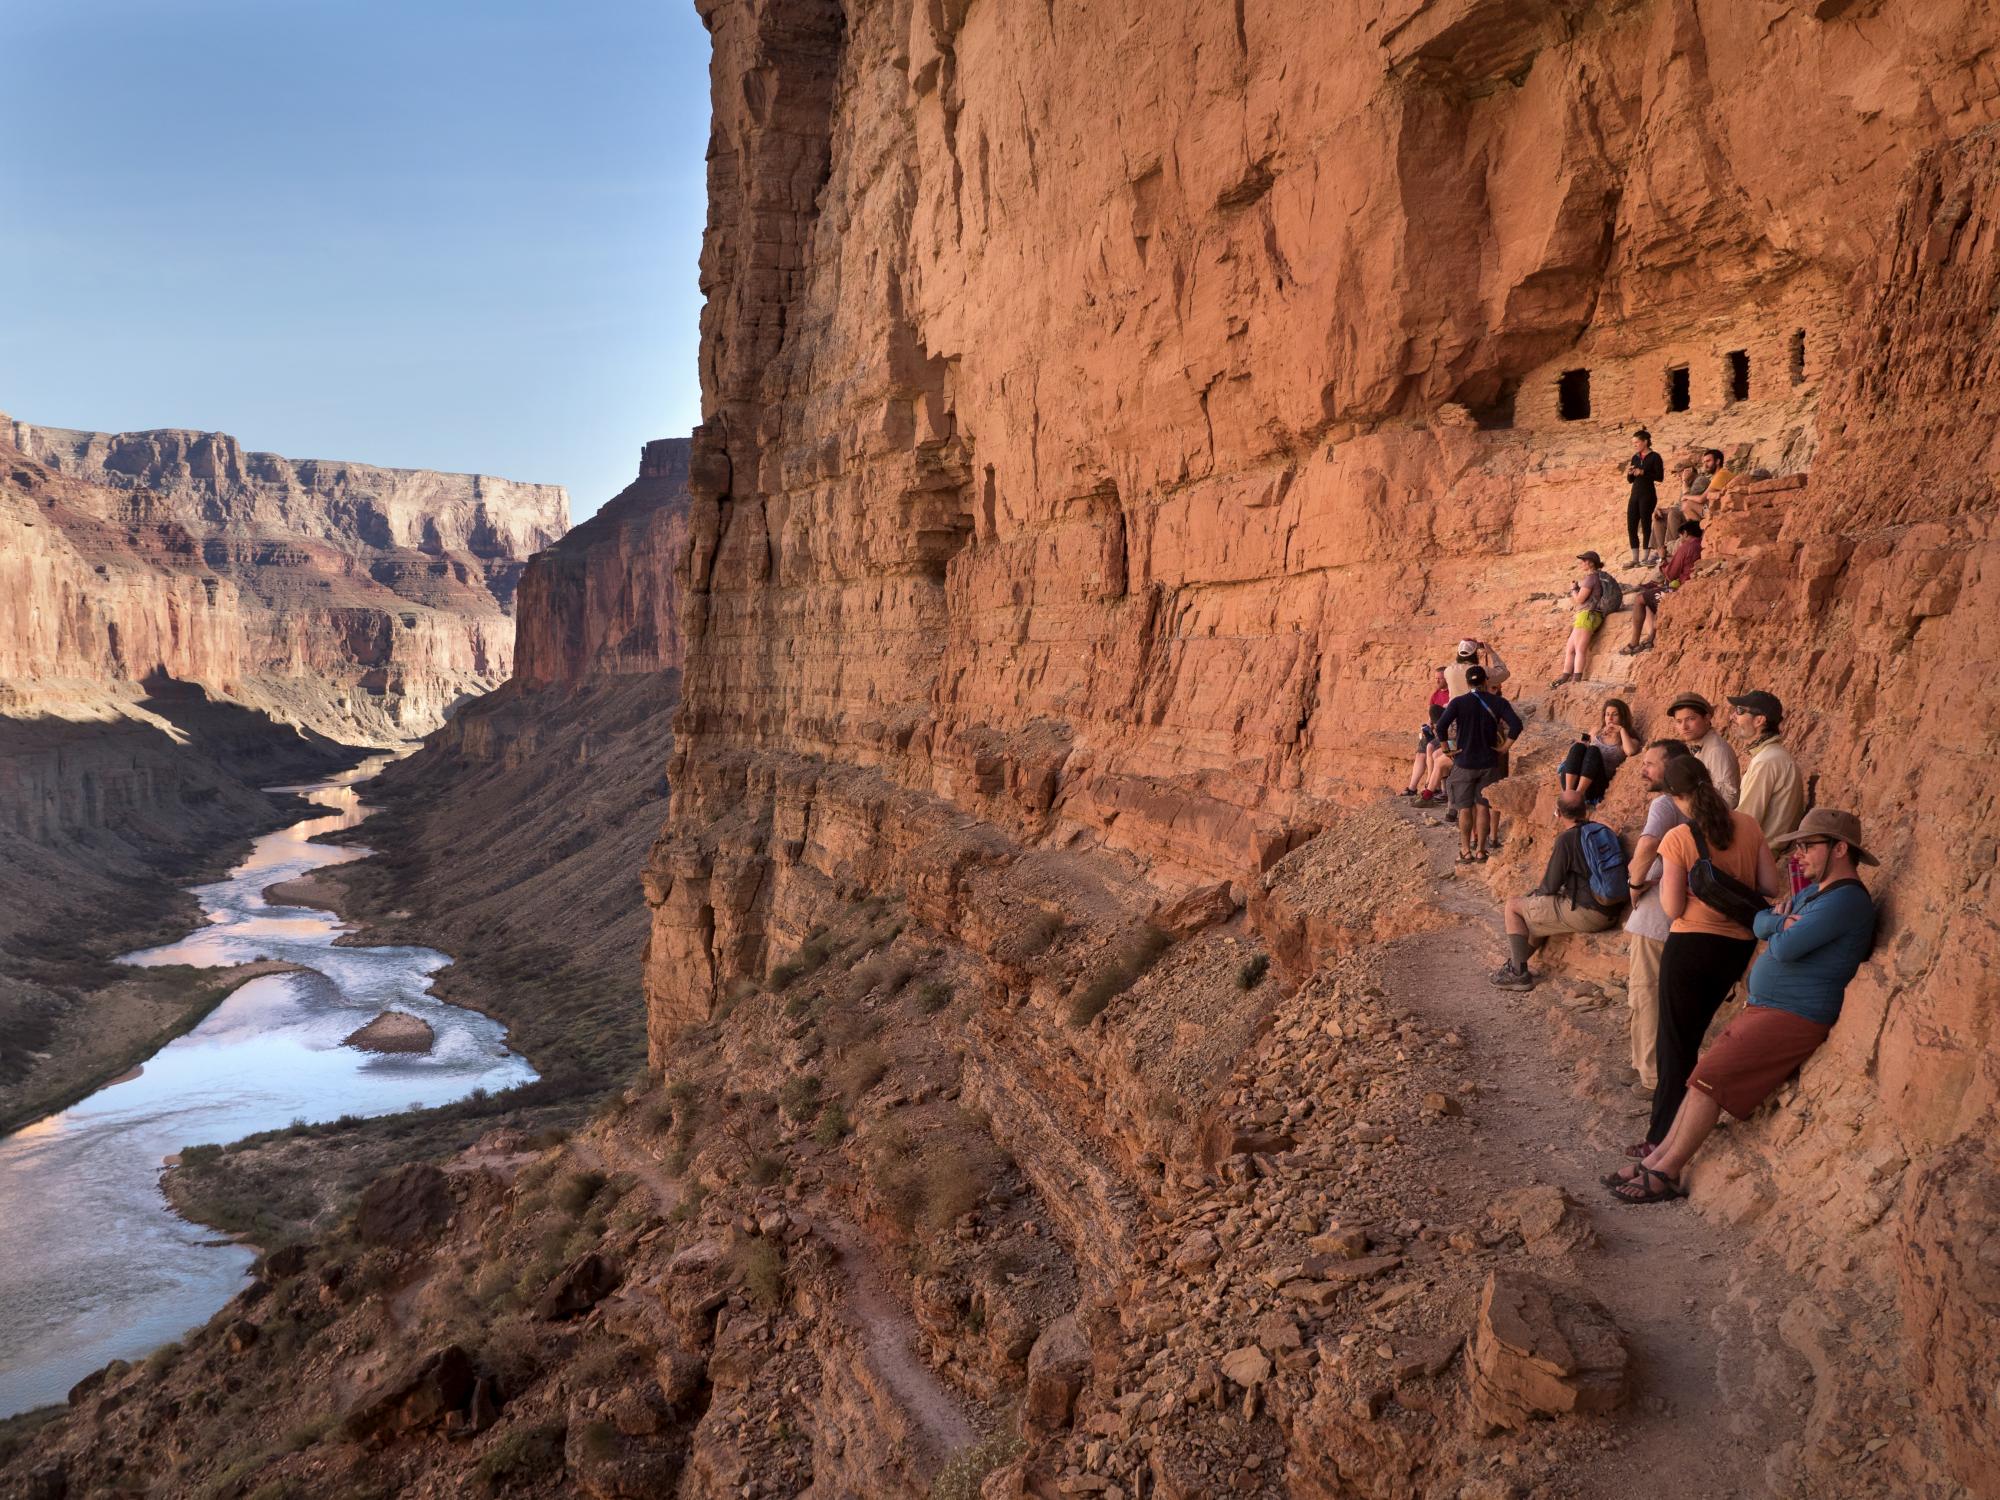 University students at Nankoweap granary ruins, overlooking Colorado River in Grand Canyon